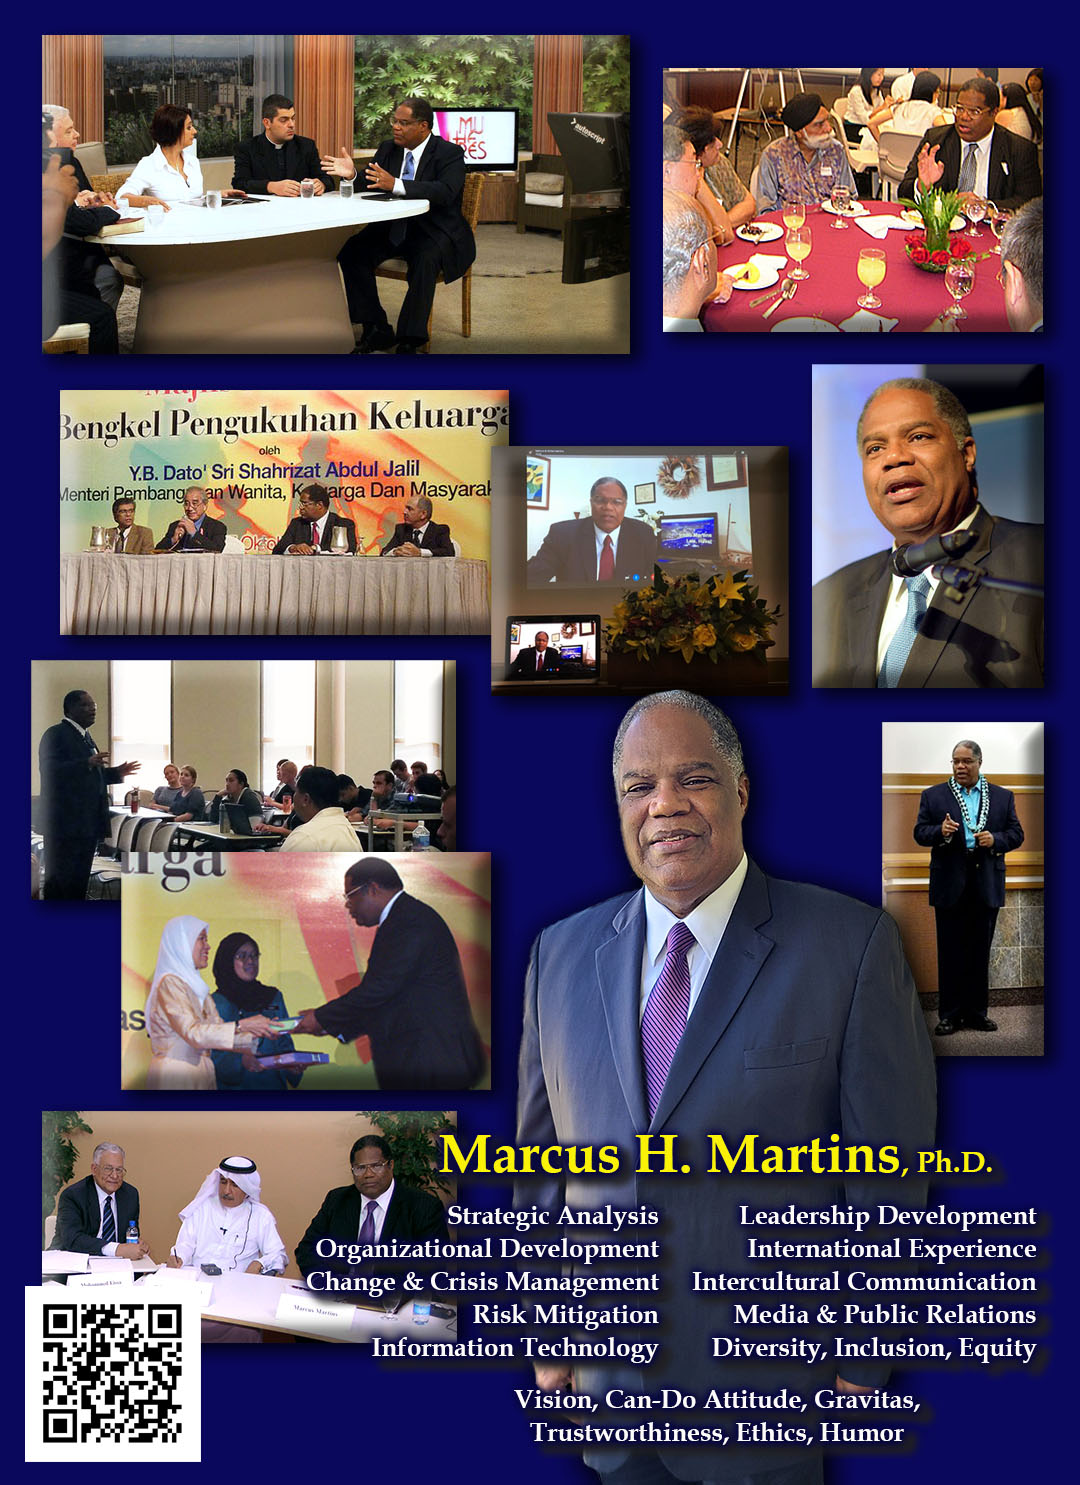 Dr. Marcus H. Martins' Visual Resume